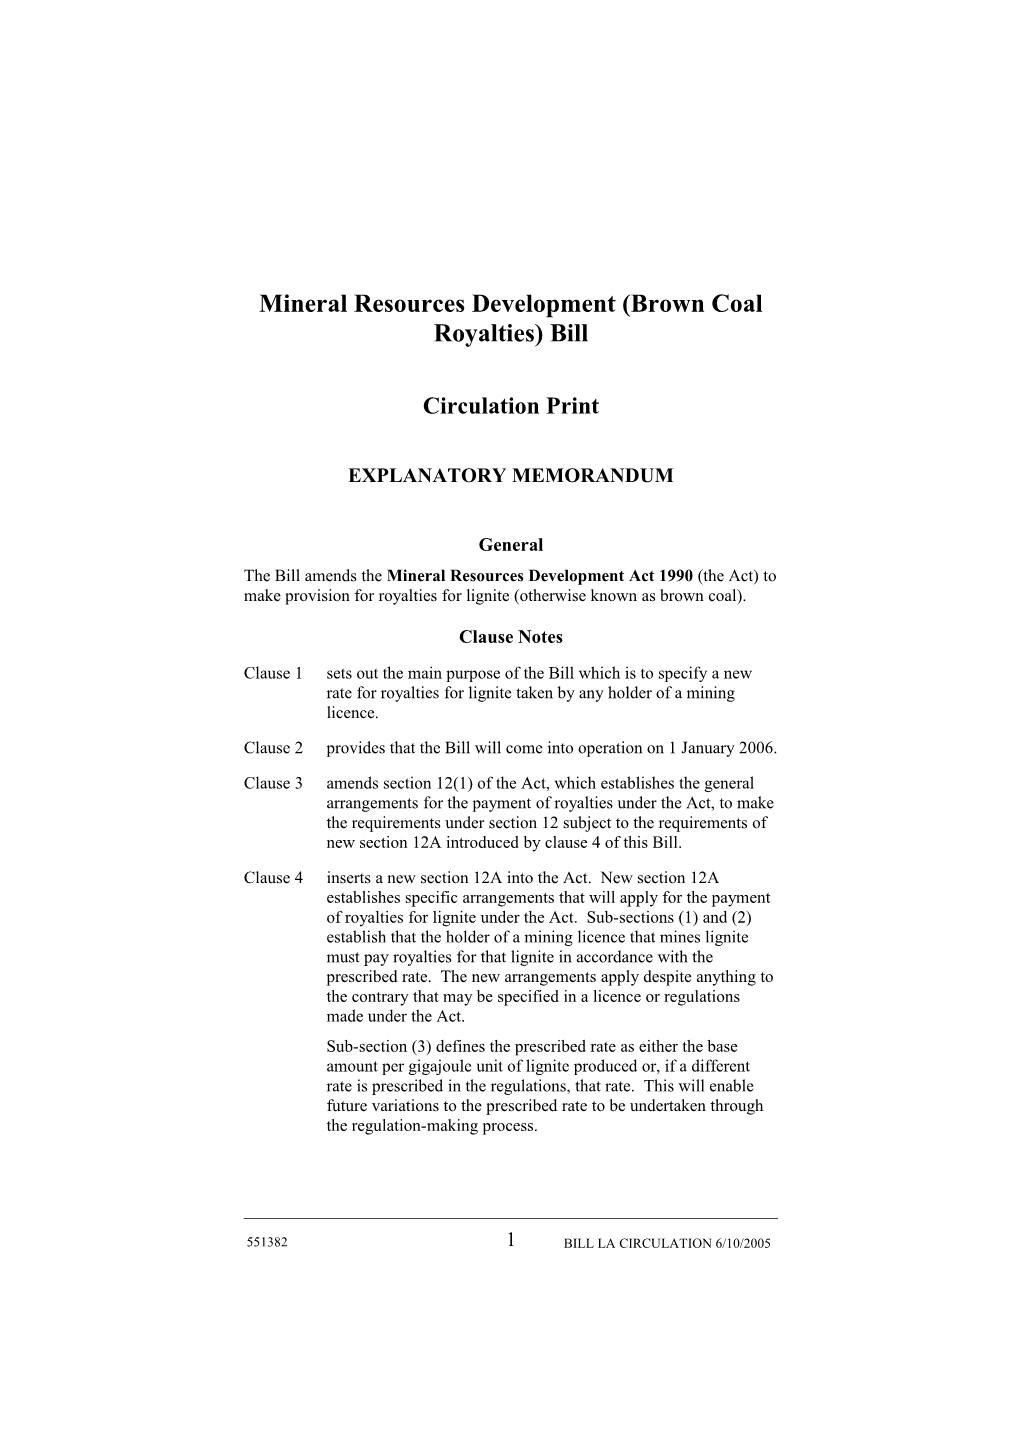 Mineral Resources Development (Brown Coal Royalties) Bill